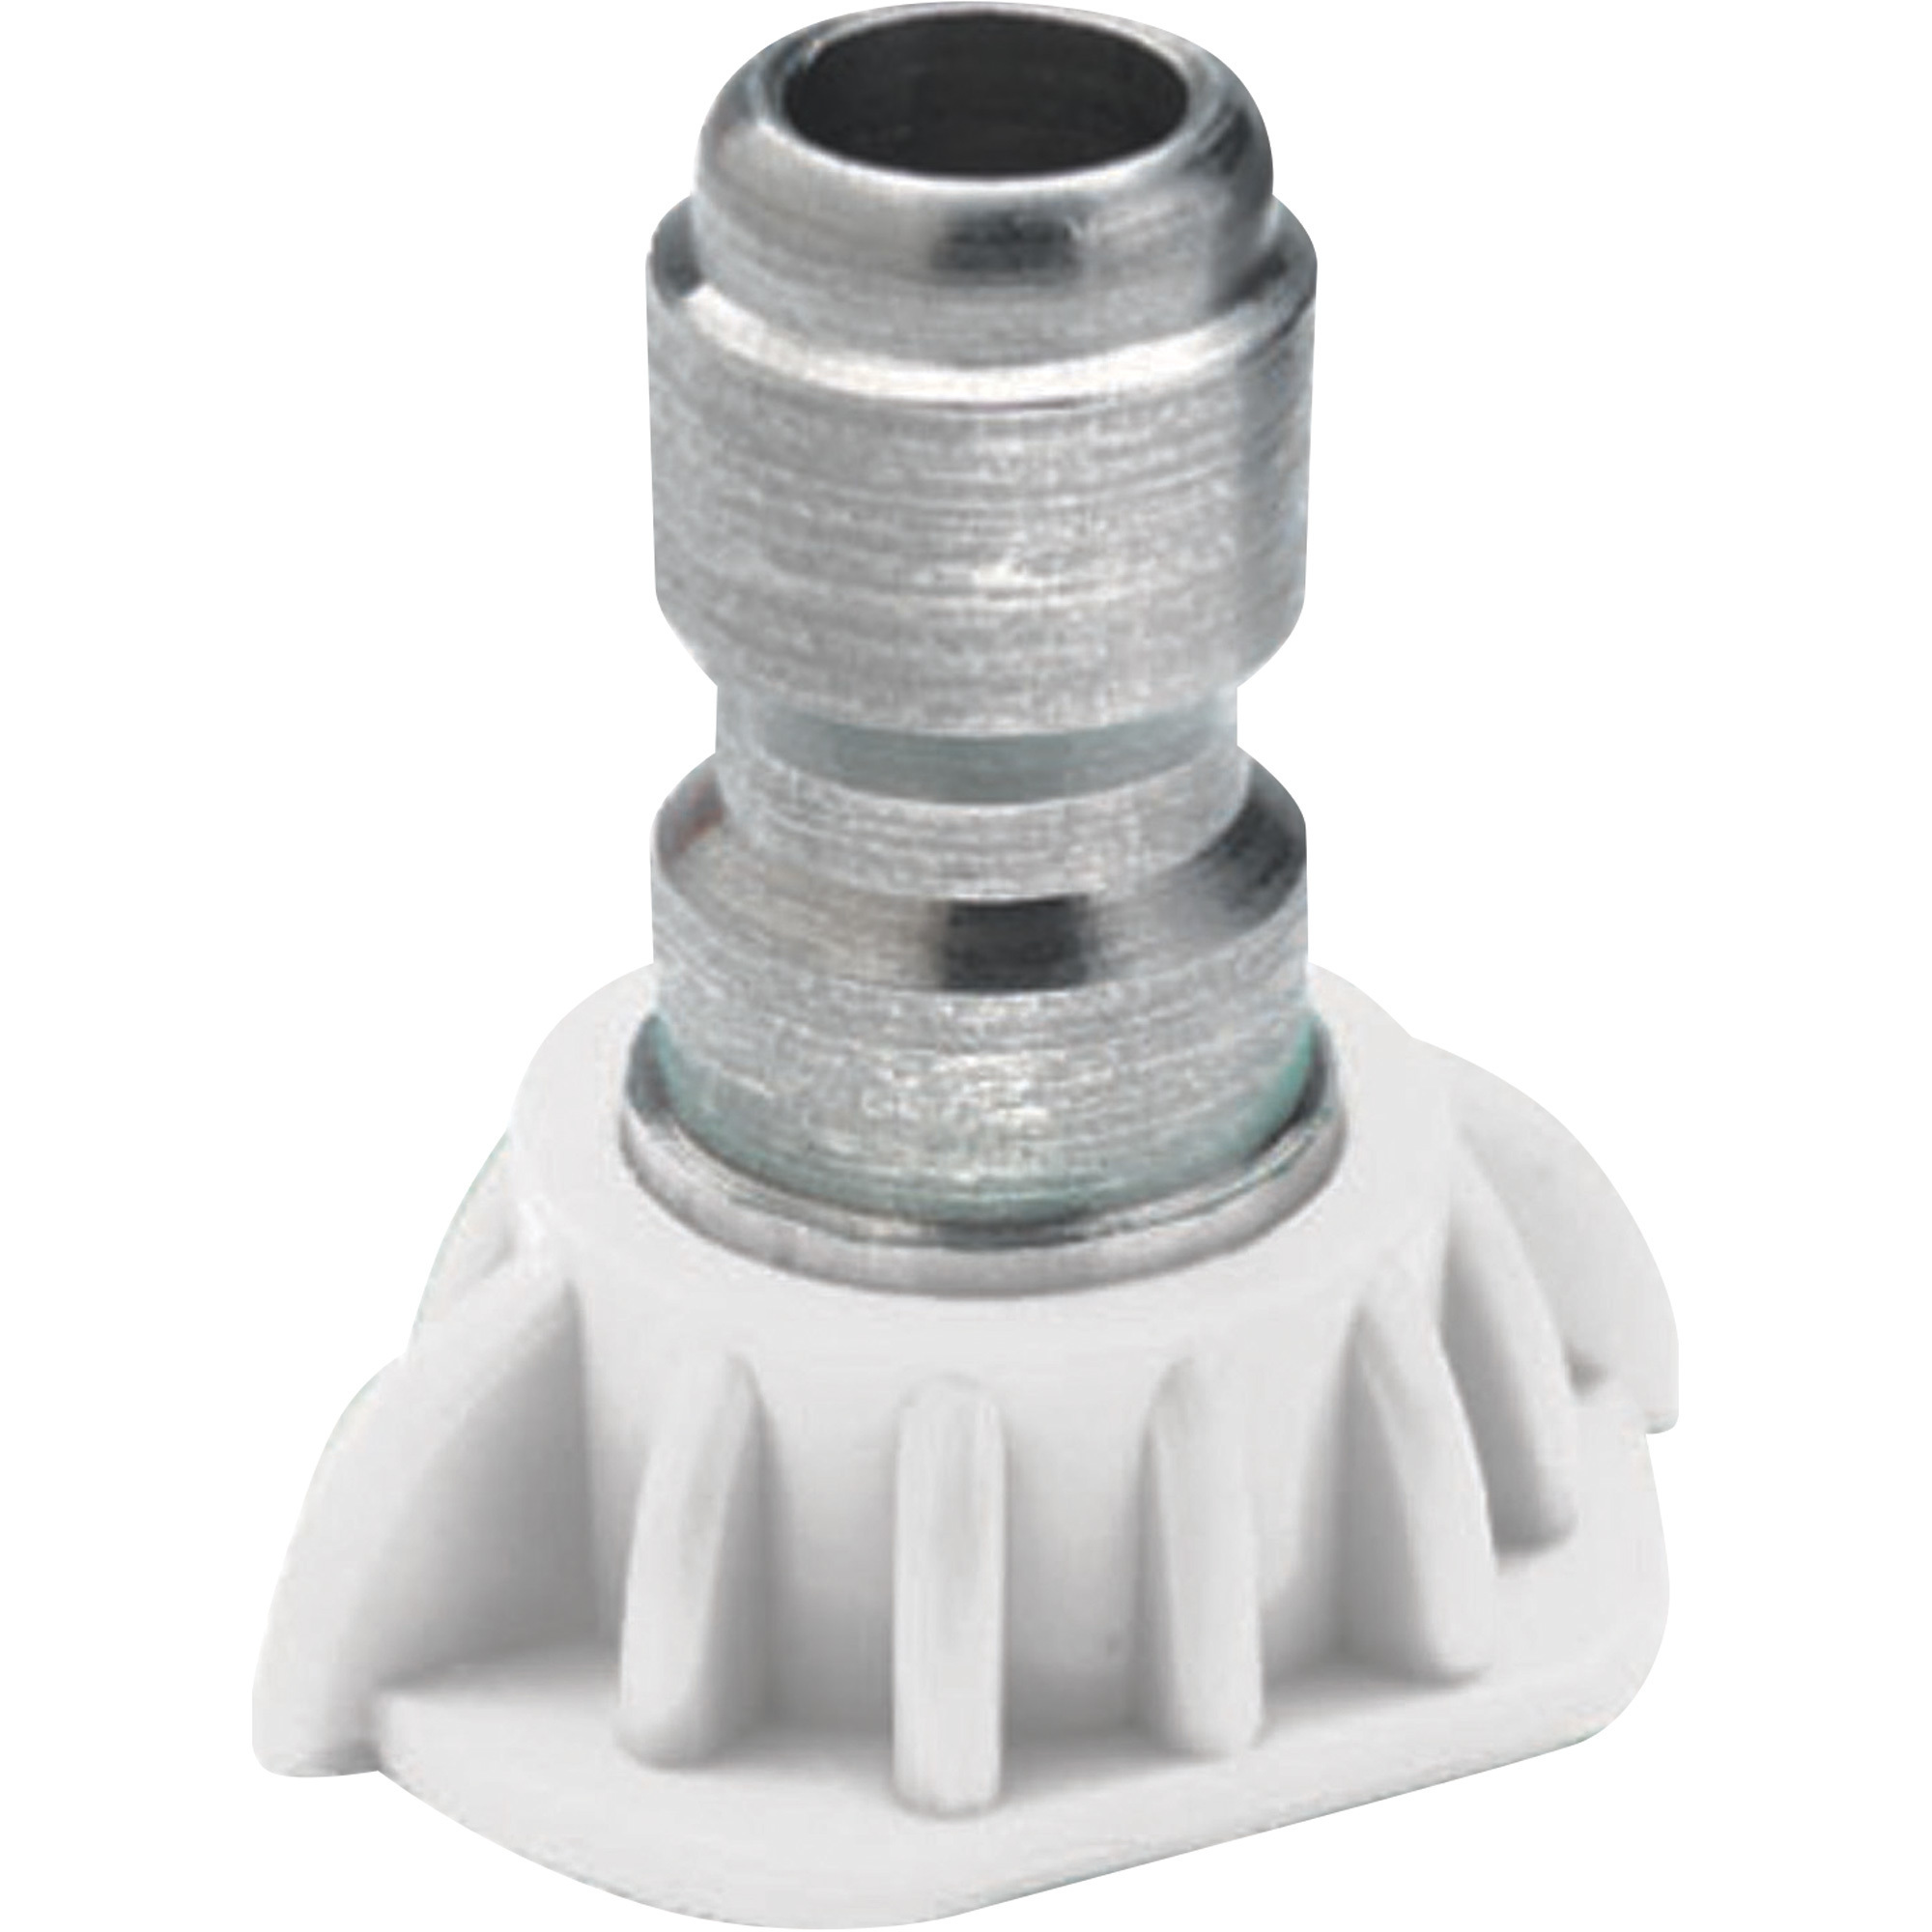 General Pump Pressure Washer Quick Couple Spray Nozzle â 2.5 Size, 40 Degree Spray, Model N40025QP